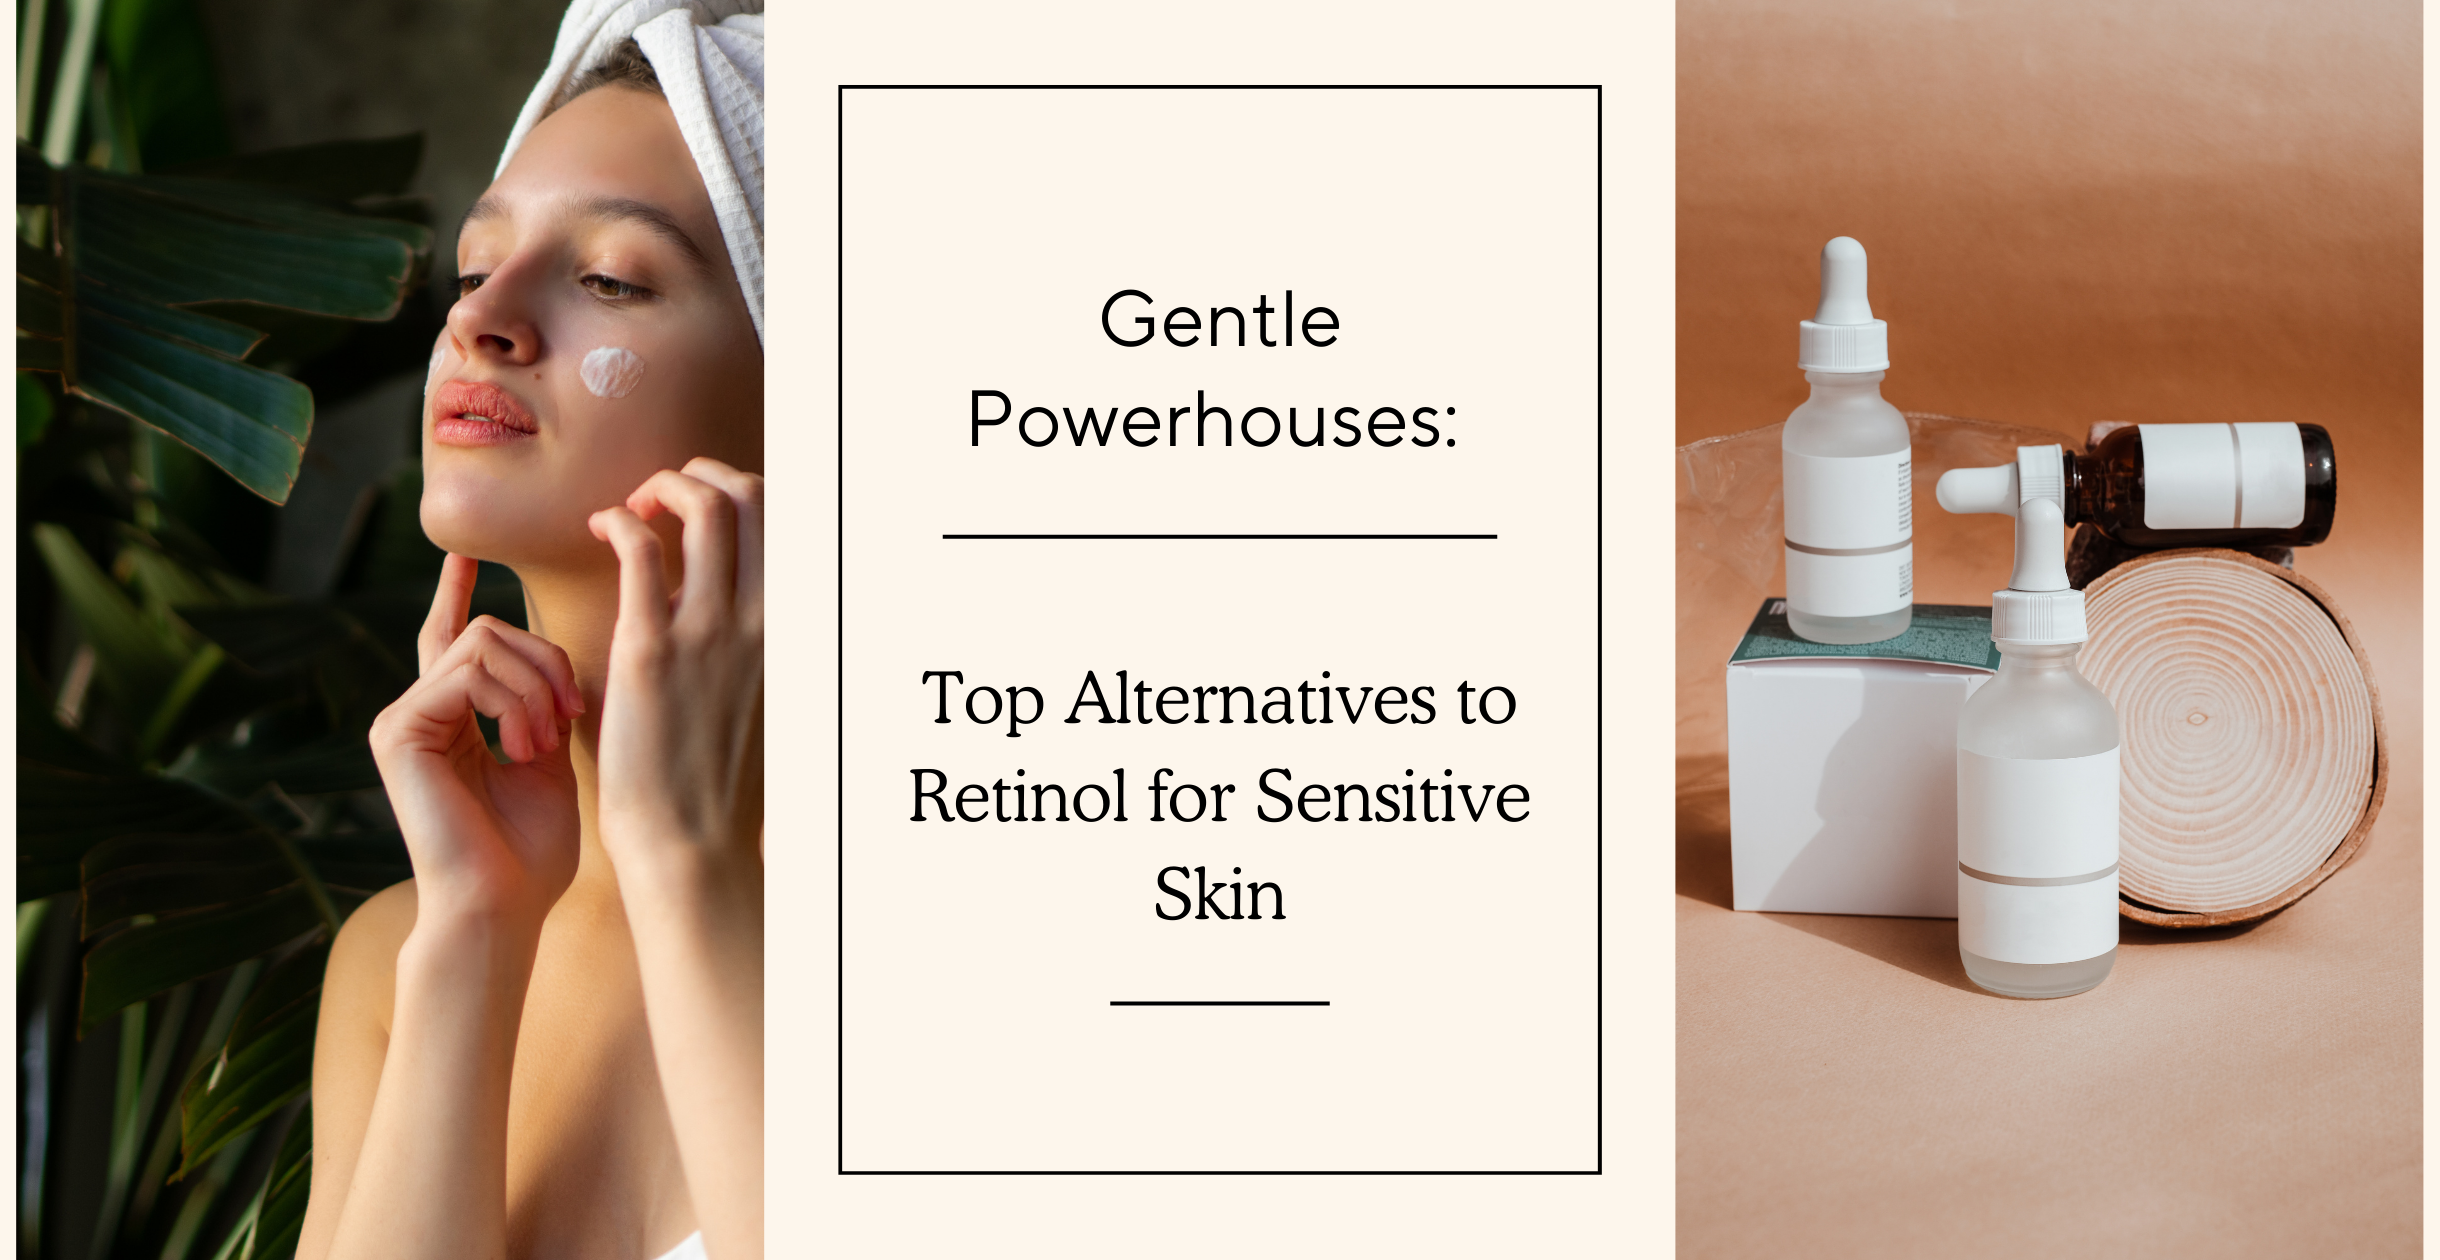 Gentle Powerhouses: Top Alternatives to Retinol for Sensitive Skin